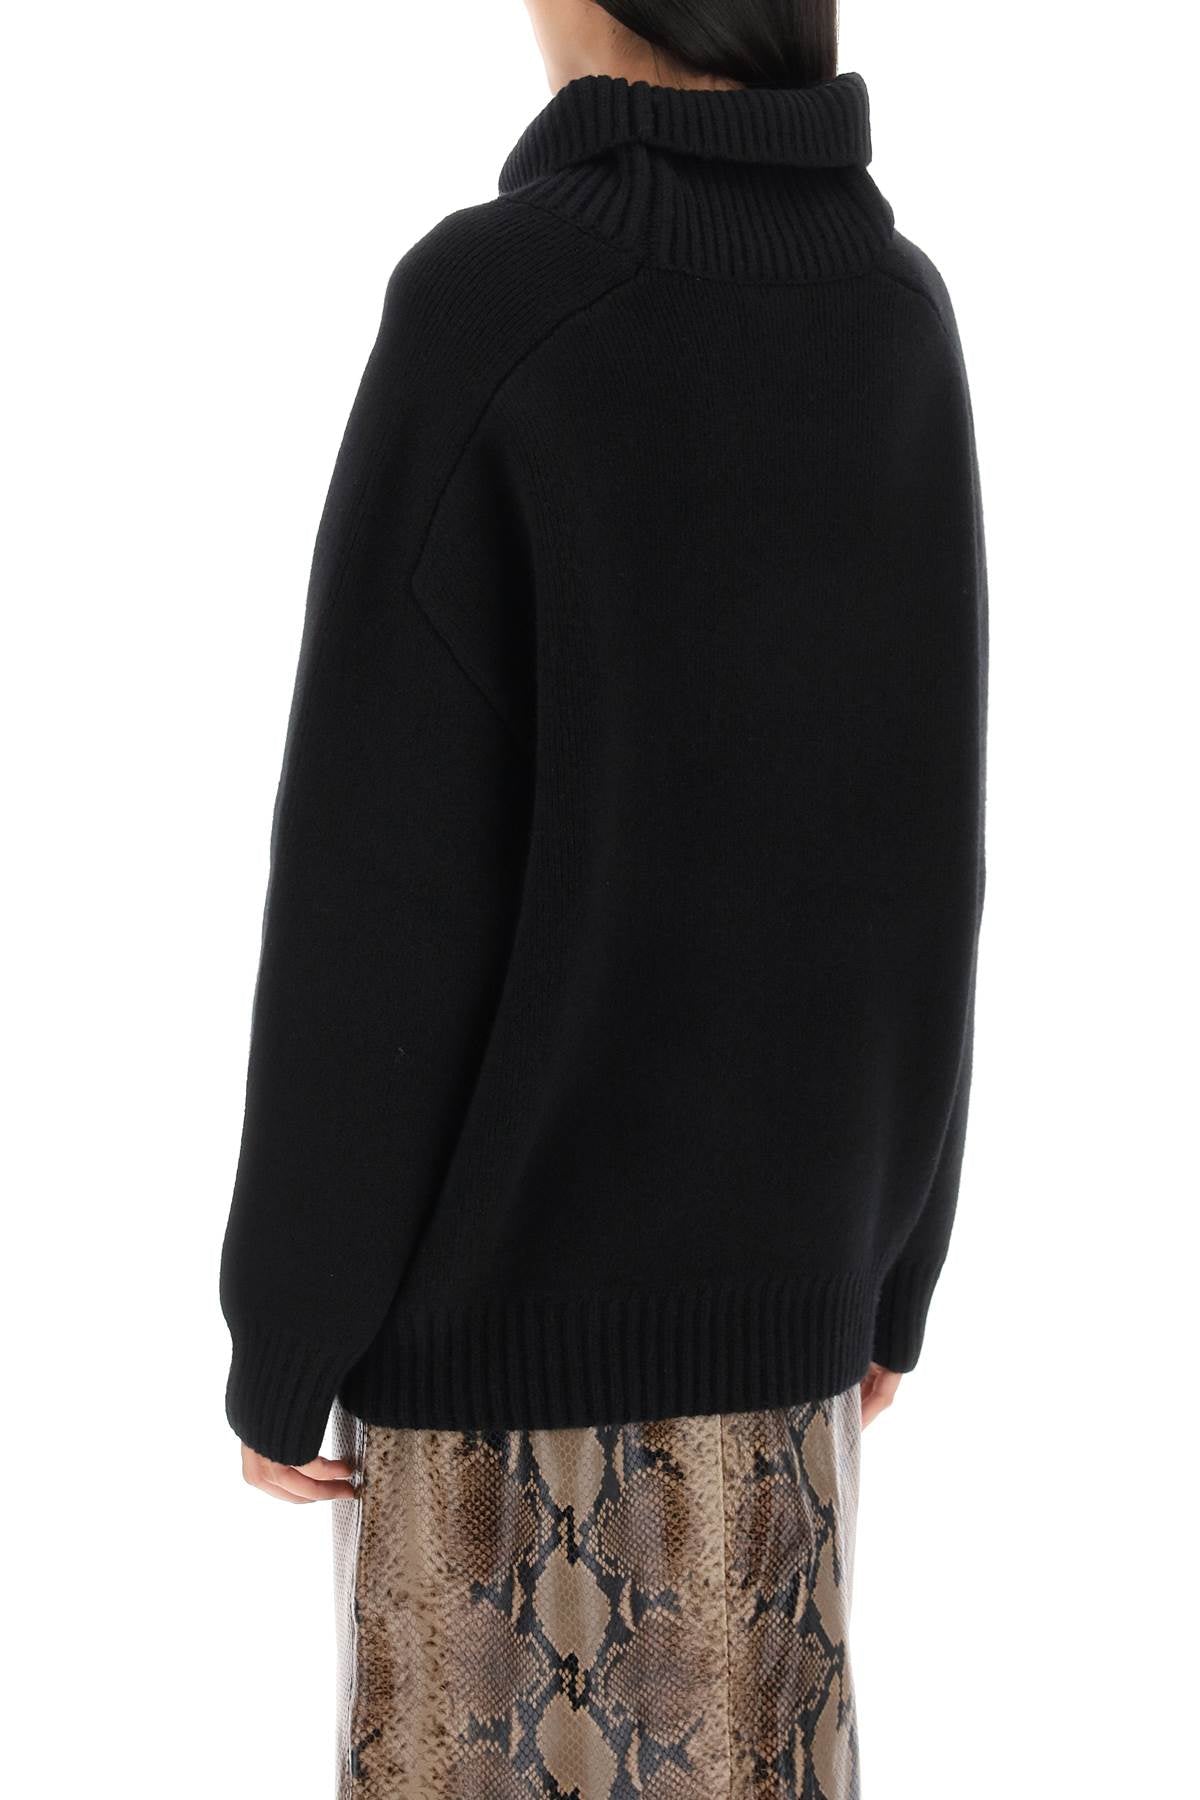 KHAITE Black Cashmere Sweater for Women - FW23 Collection